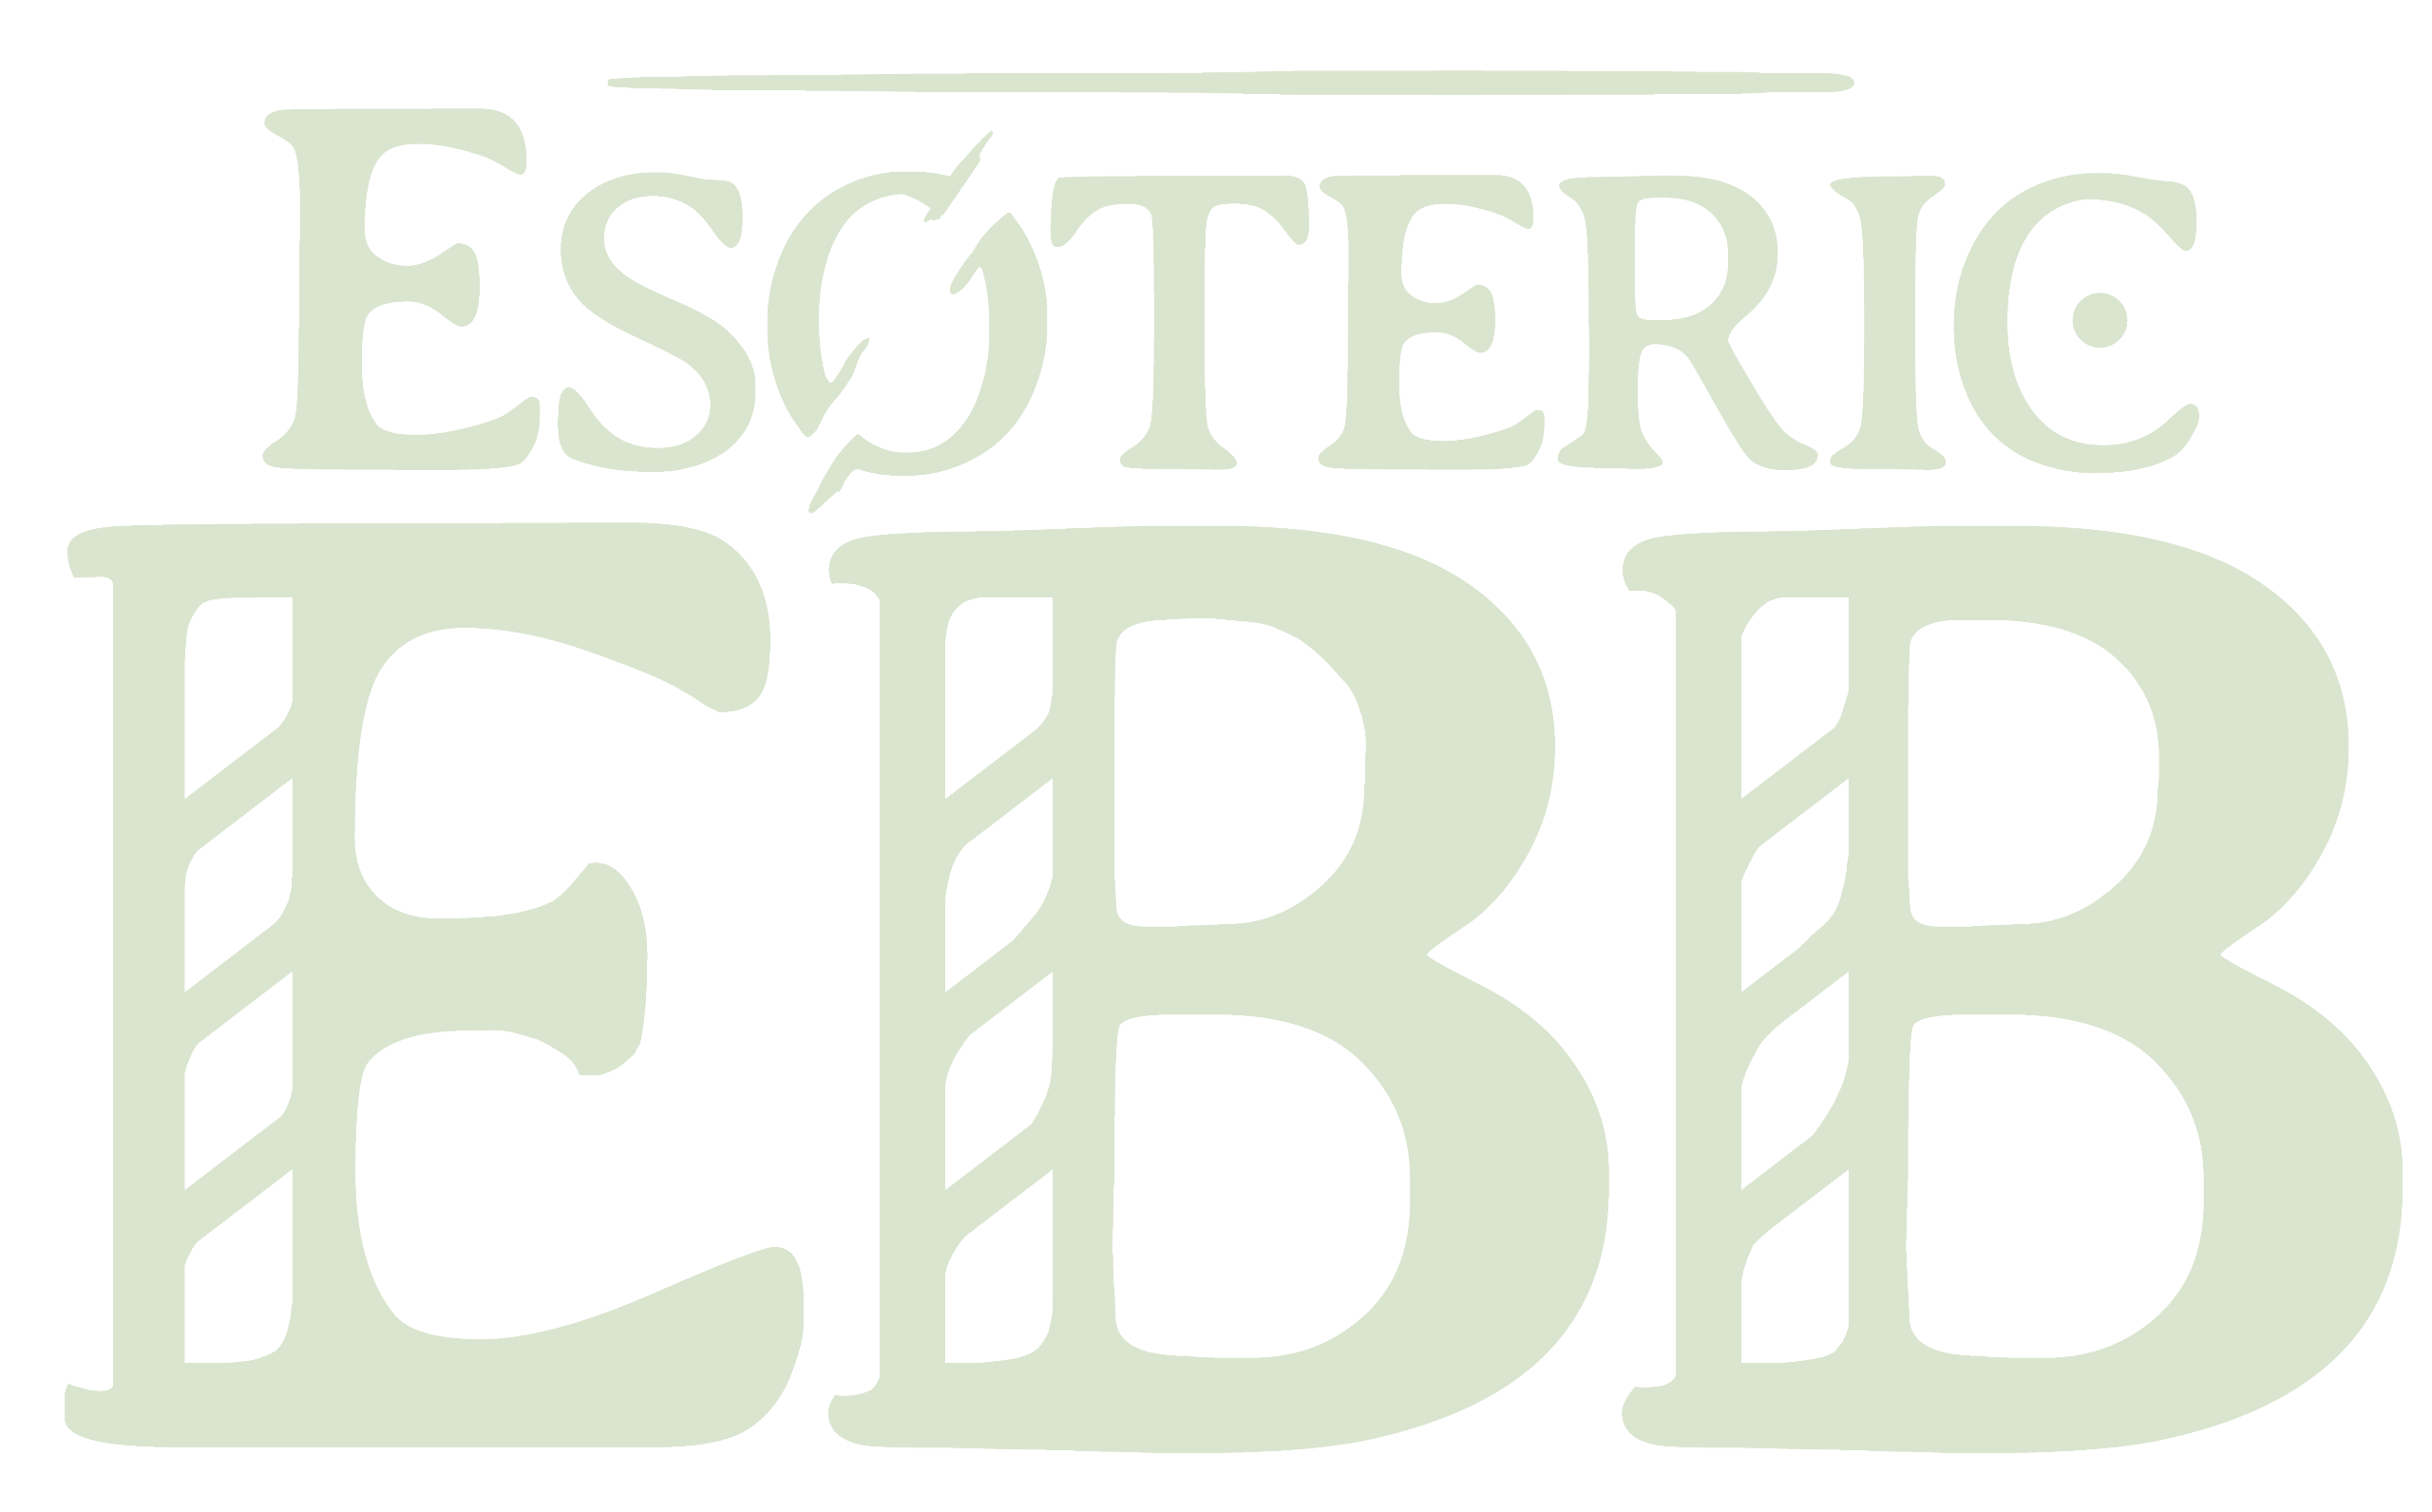 ESOTERIC EBB